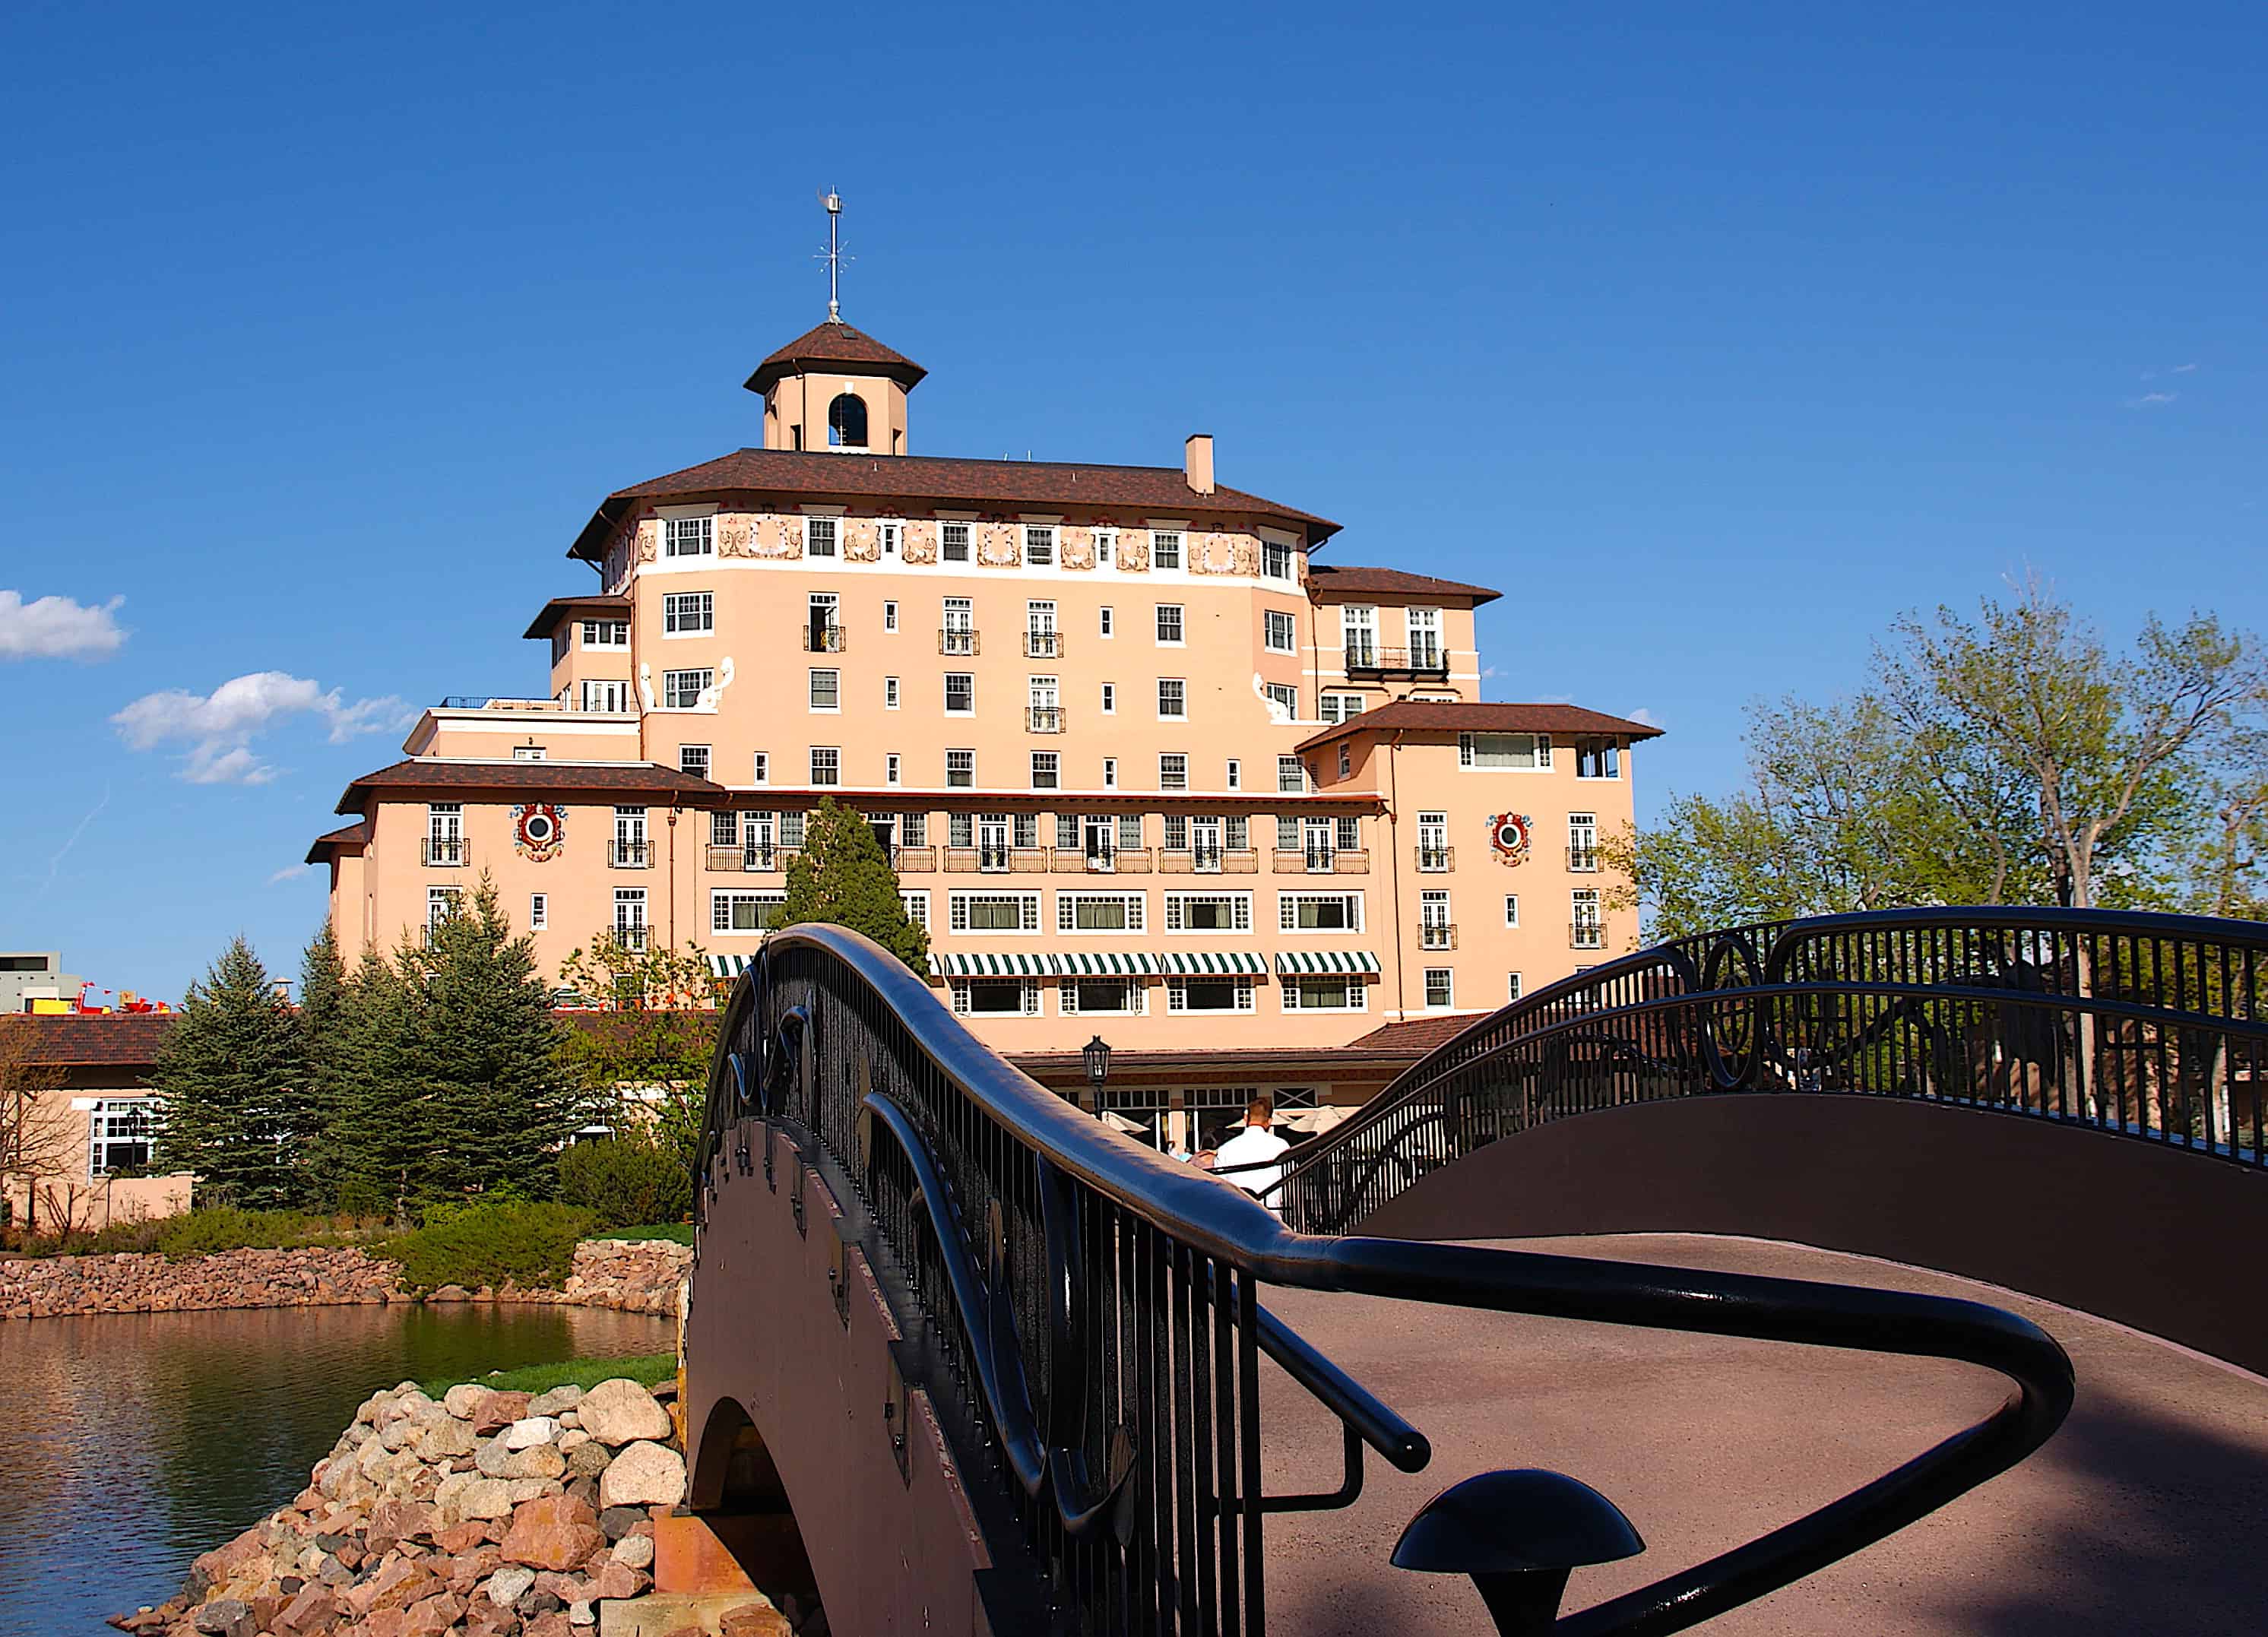 Looking at the Broadmoor hotel in Colorado Springs from across the foot bridge.